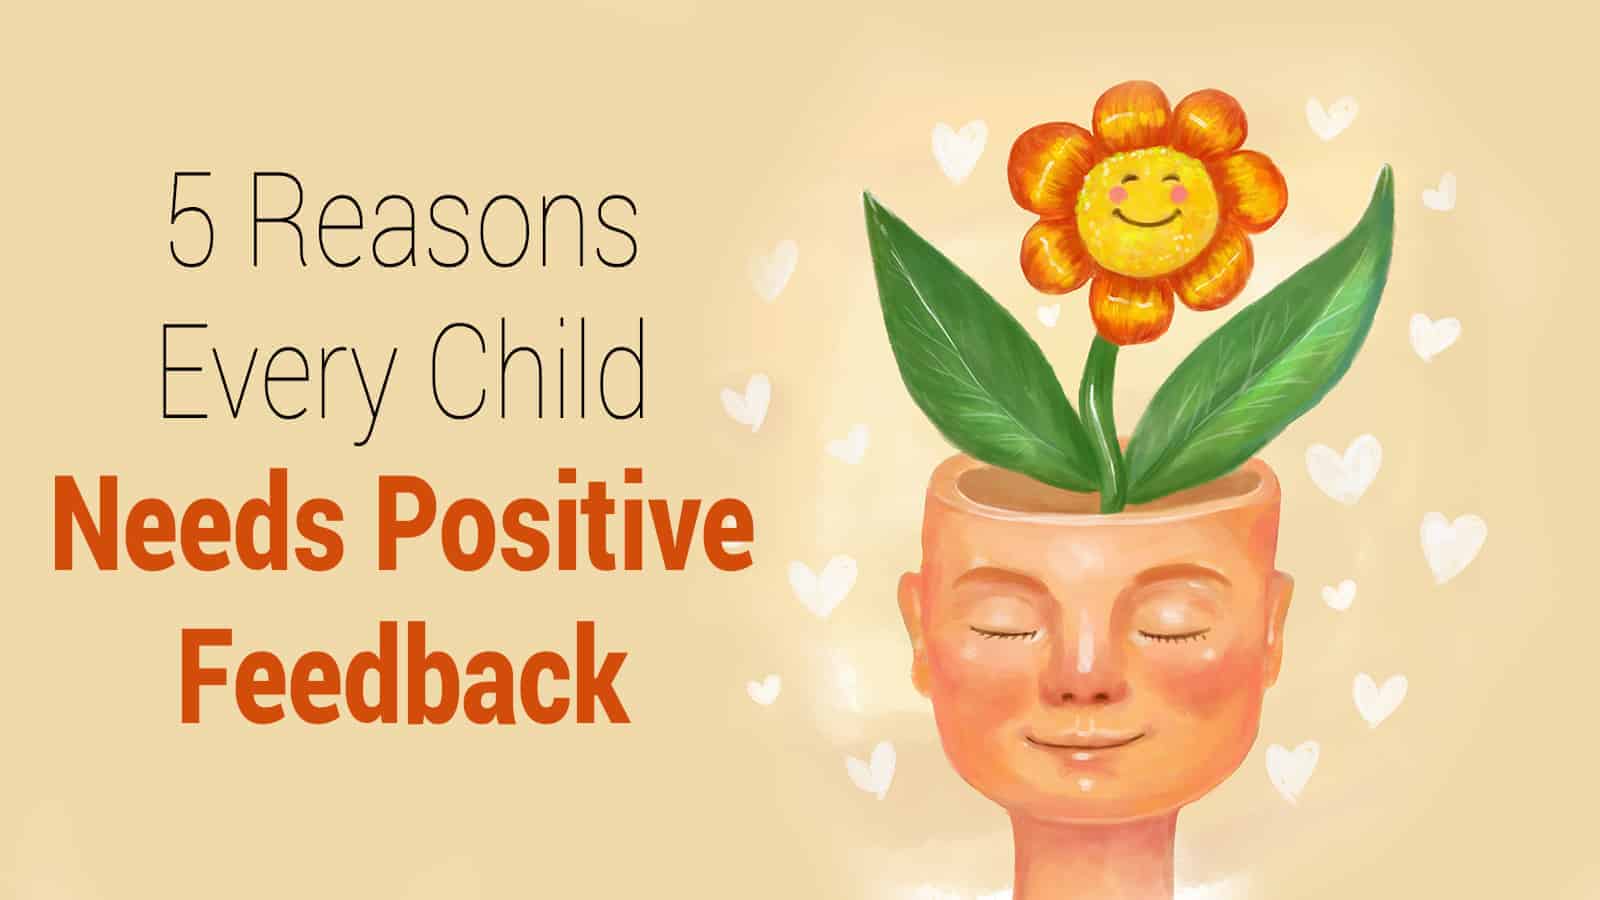 5 Reasons Every Child Needs Positive Feedback